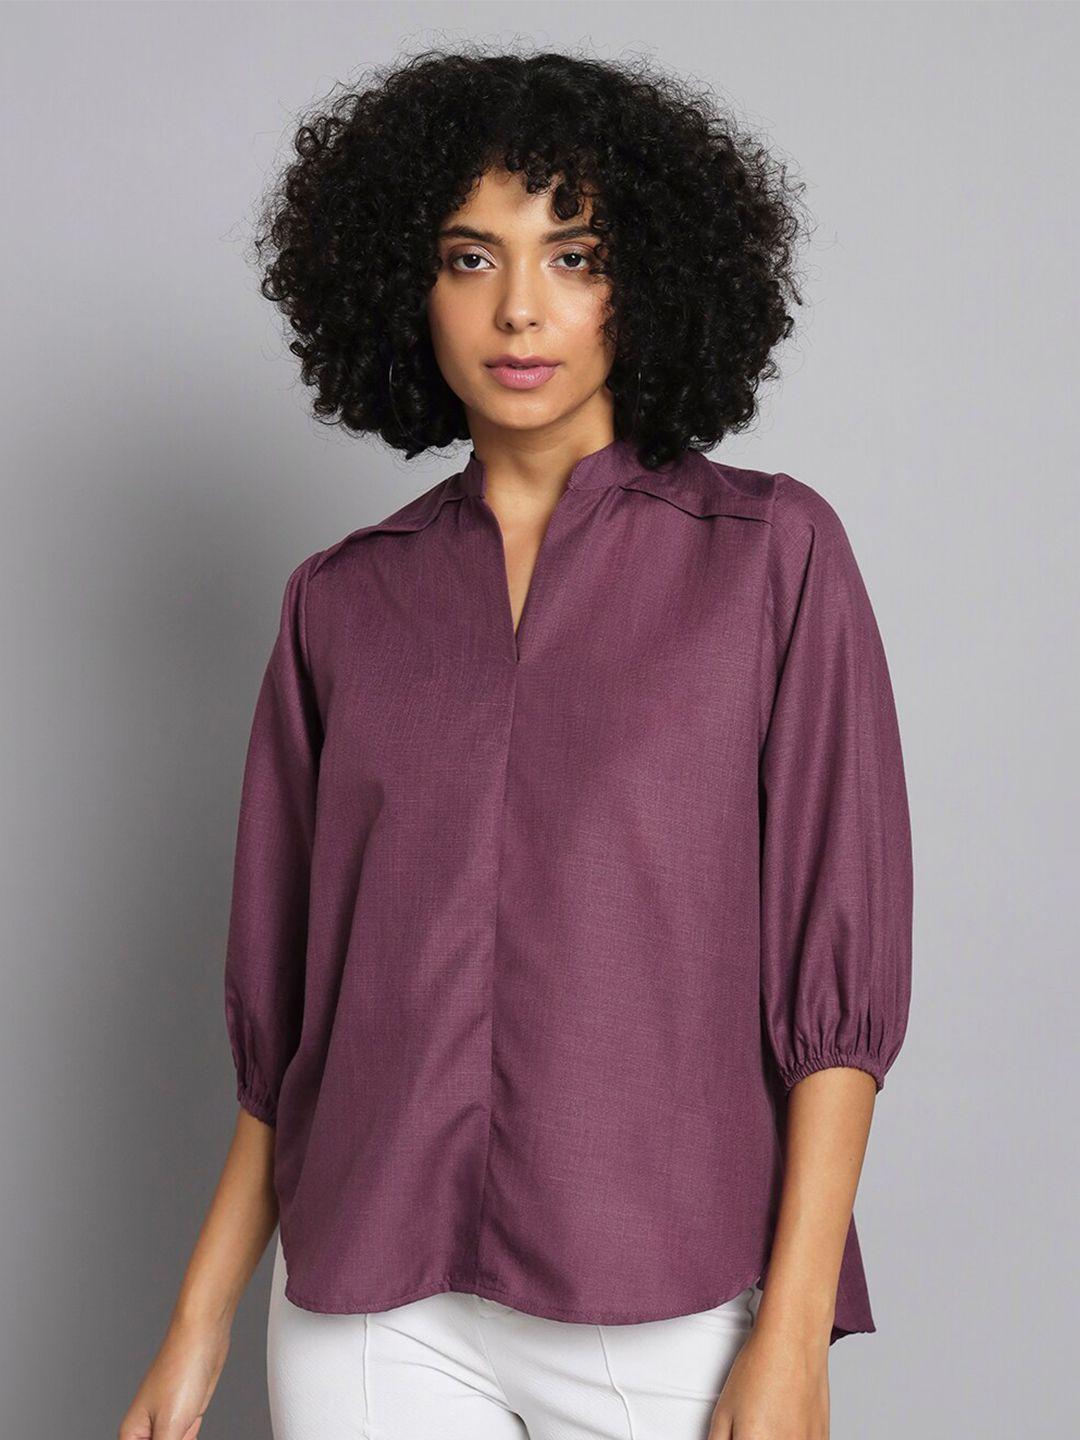 broowl burgundy mandarin collar cotton shirt style top